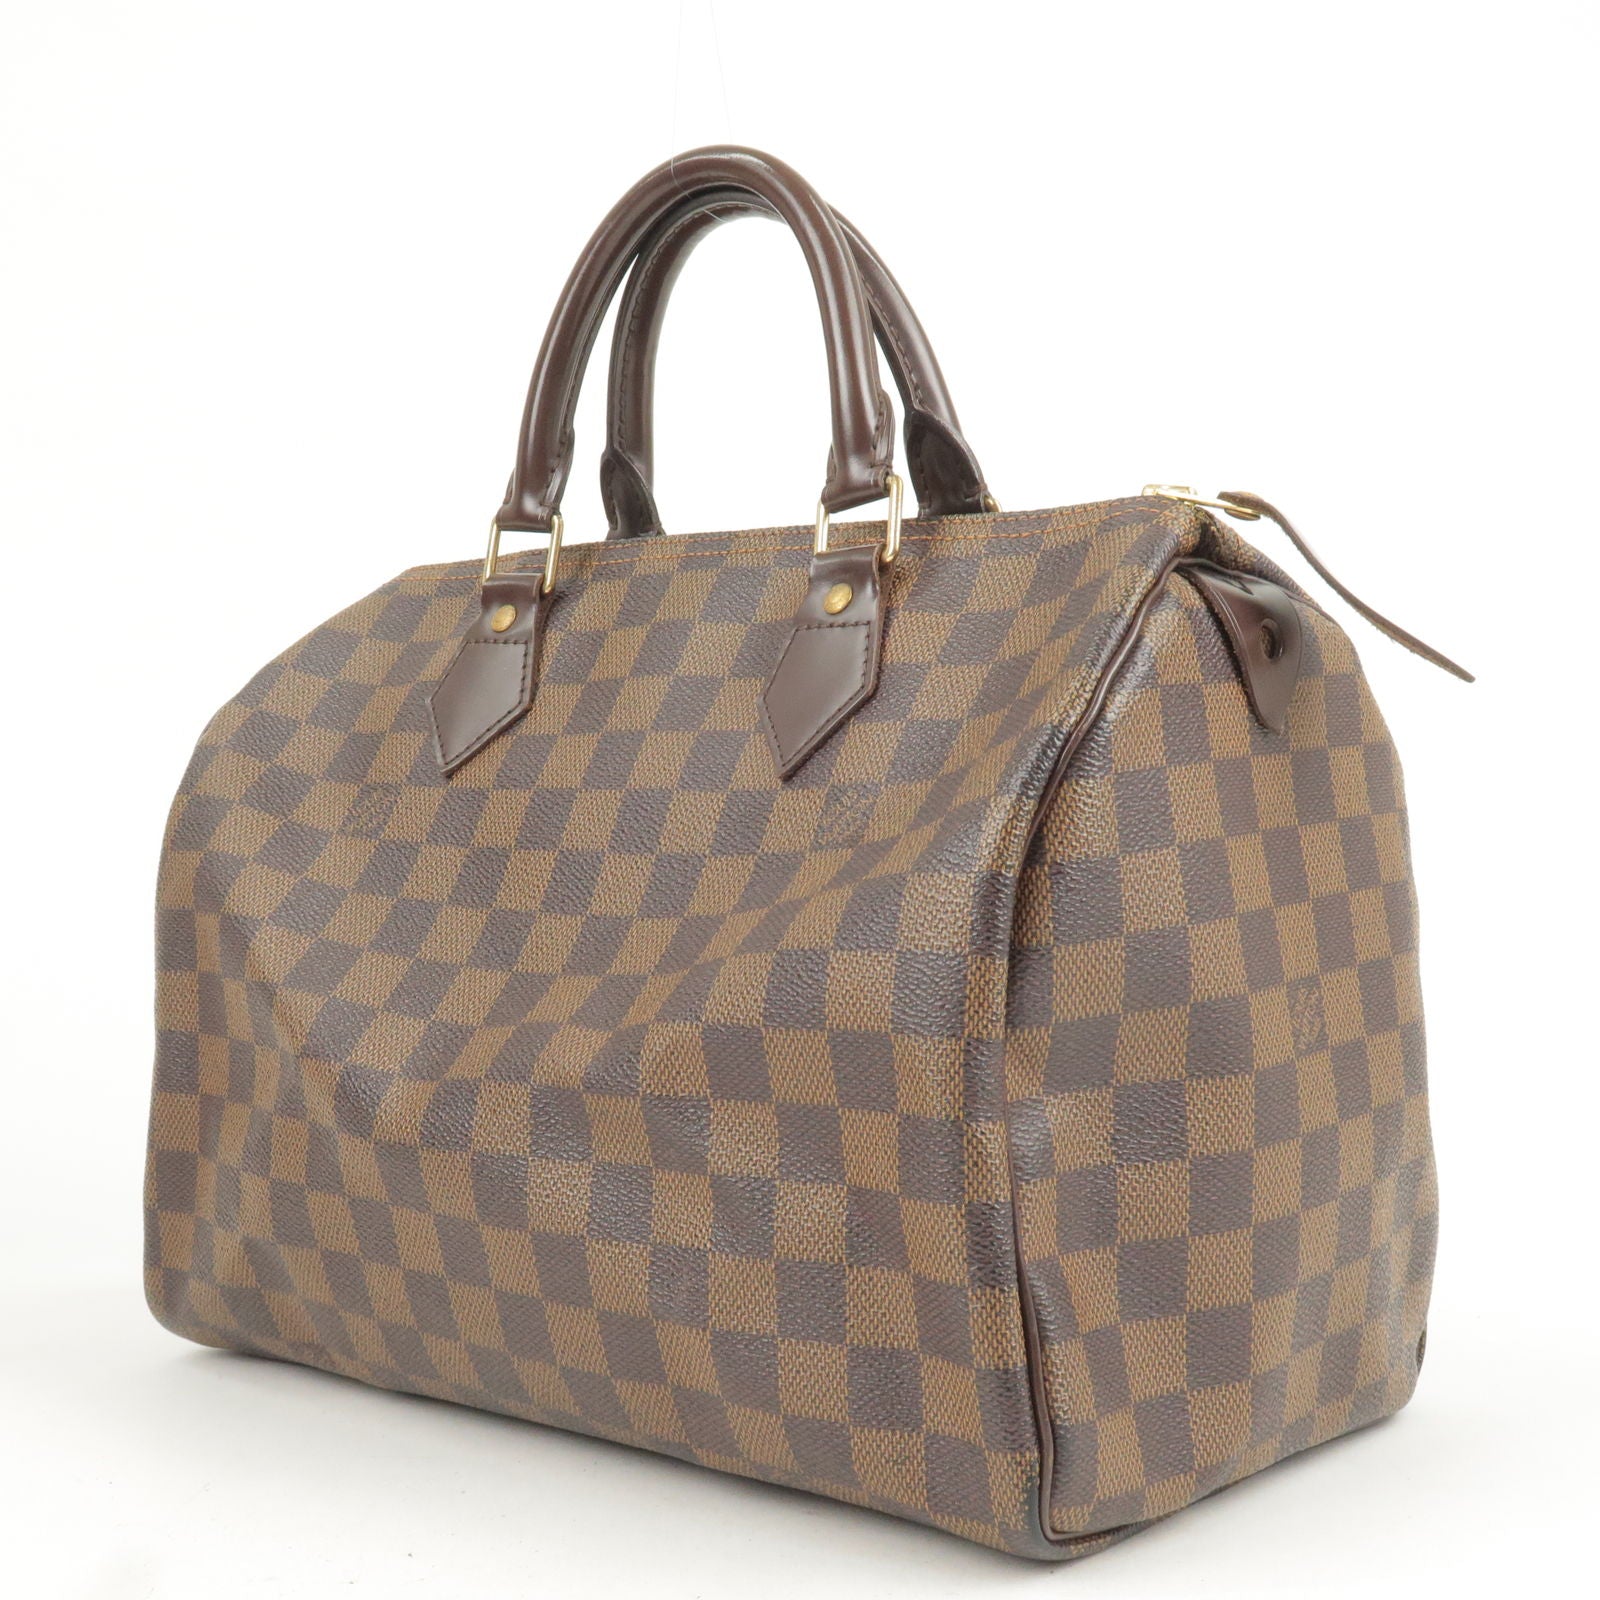 Louis Vuitton spontini damier ebene shoulder bag